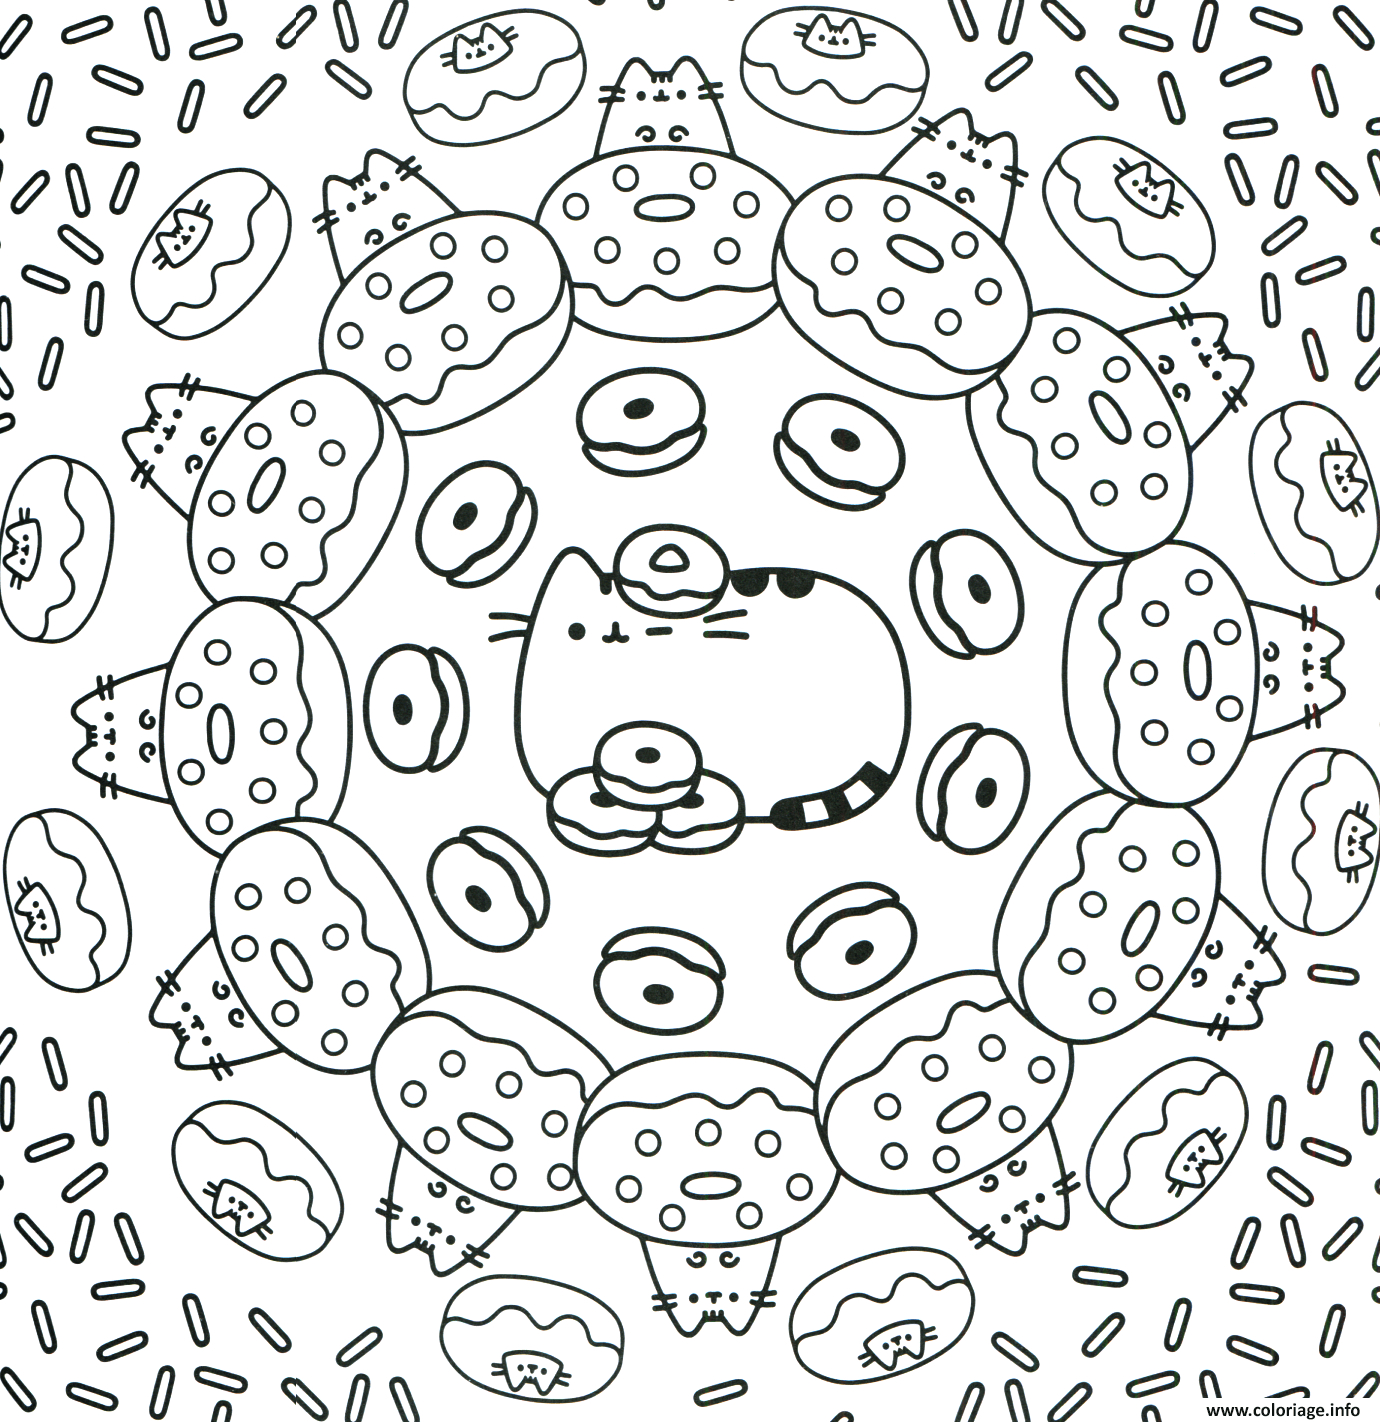 Coloriage Pusheen The Cat Donuts Pattern Dessin destiné Coloriage Donuts Kawaii A Imprimer